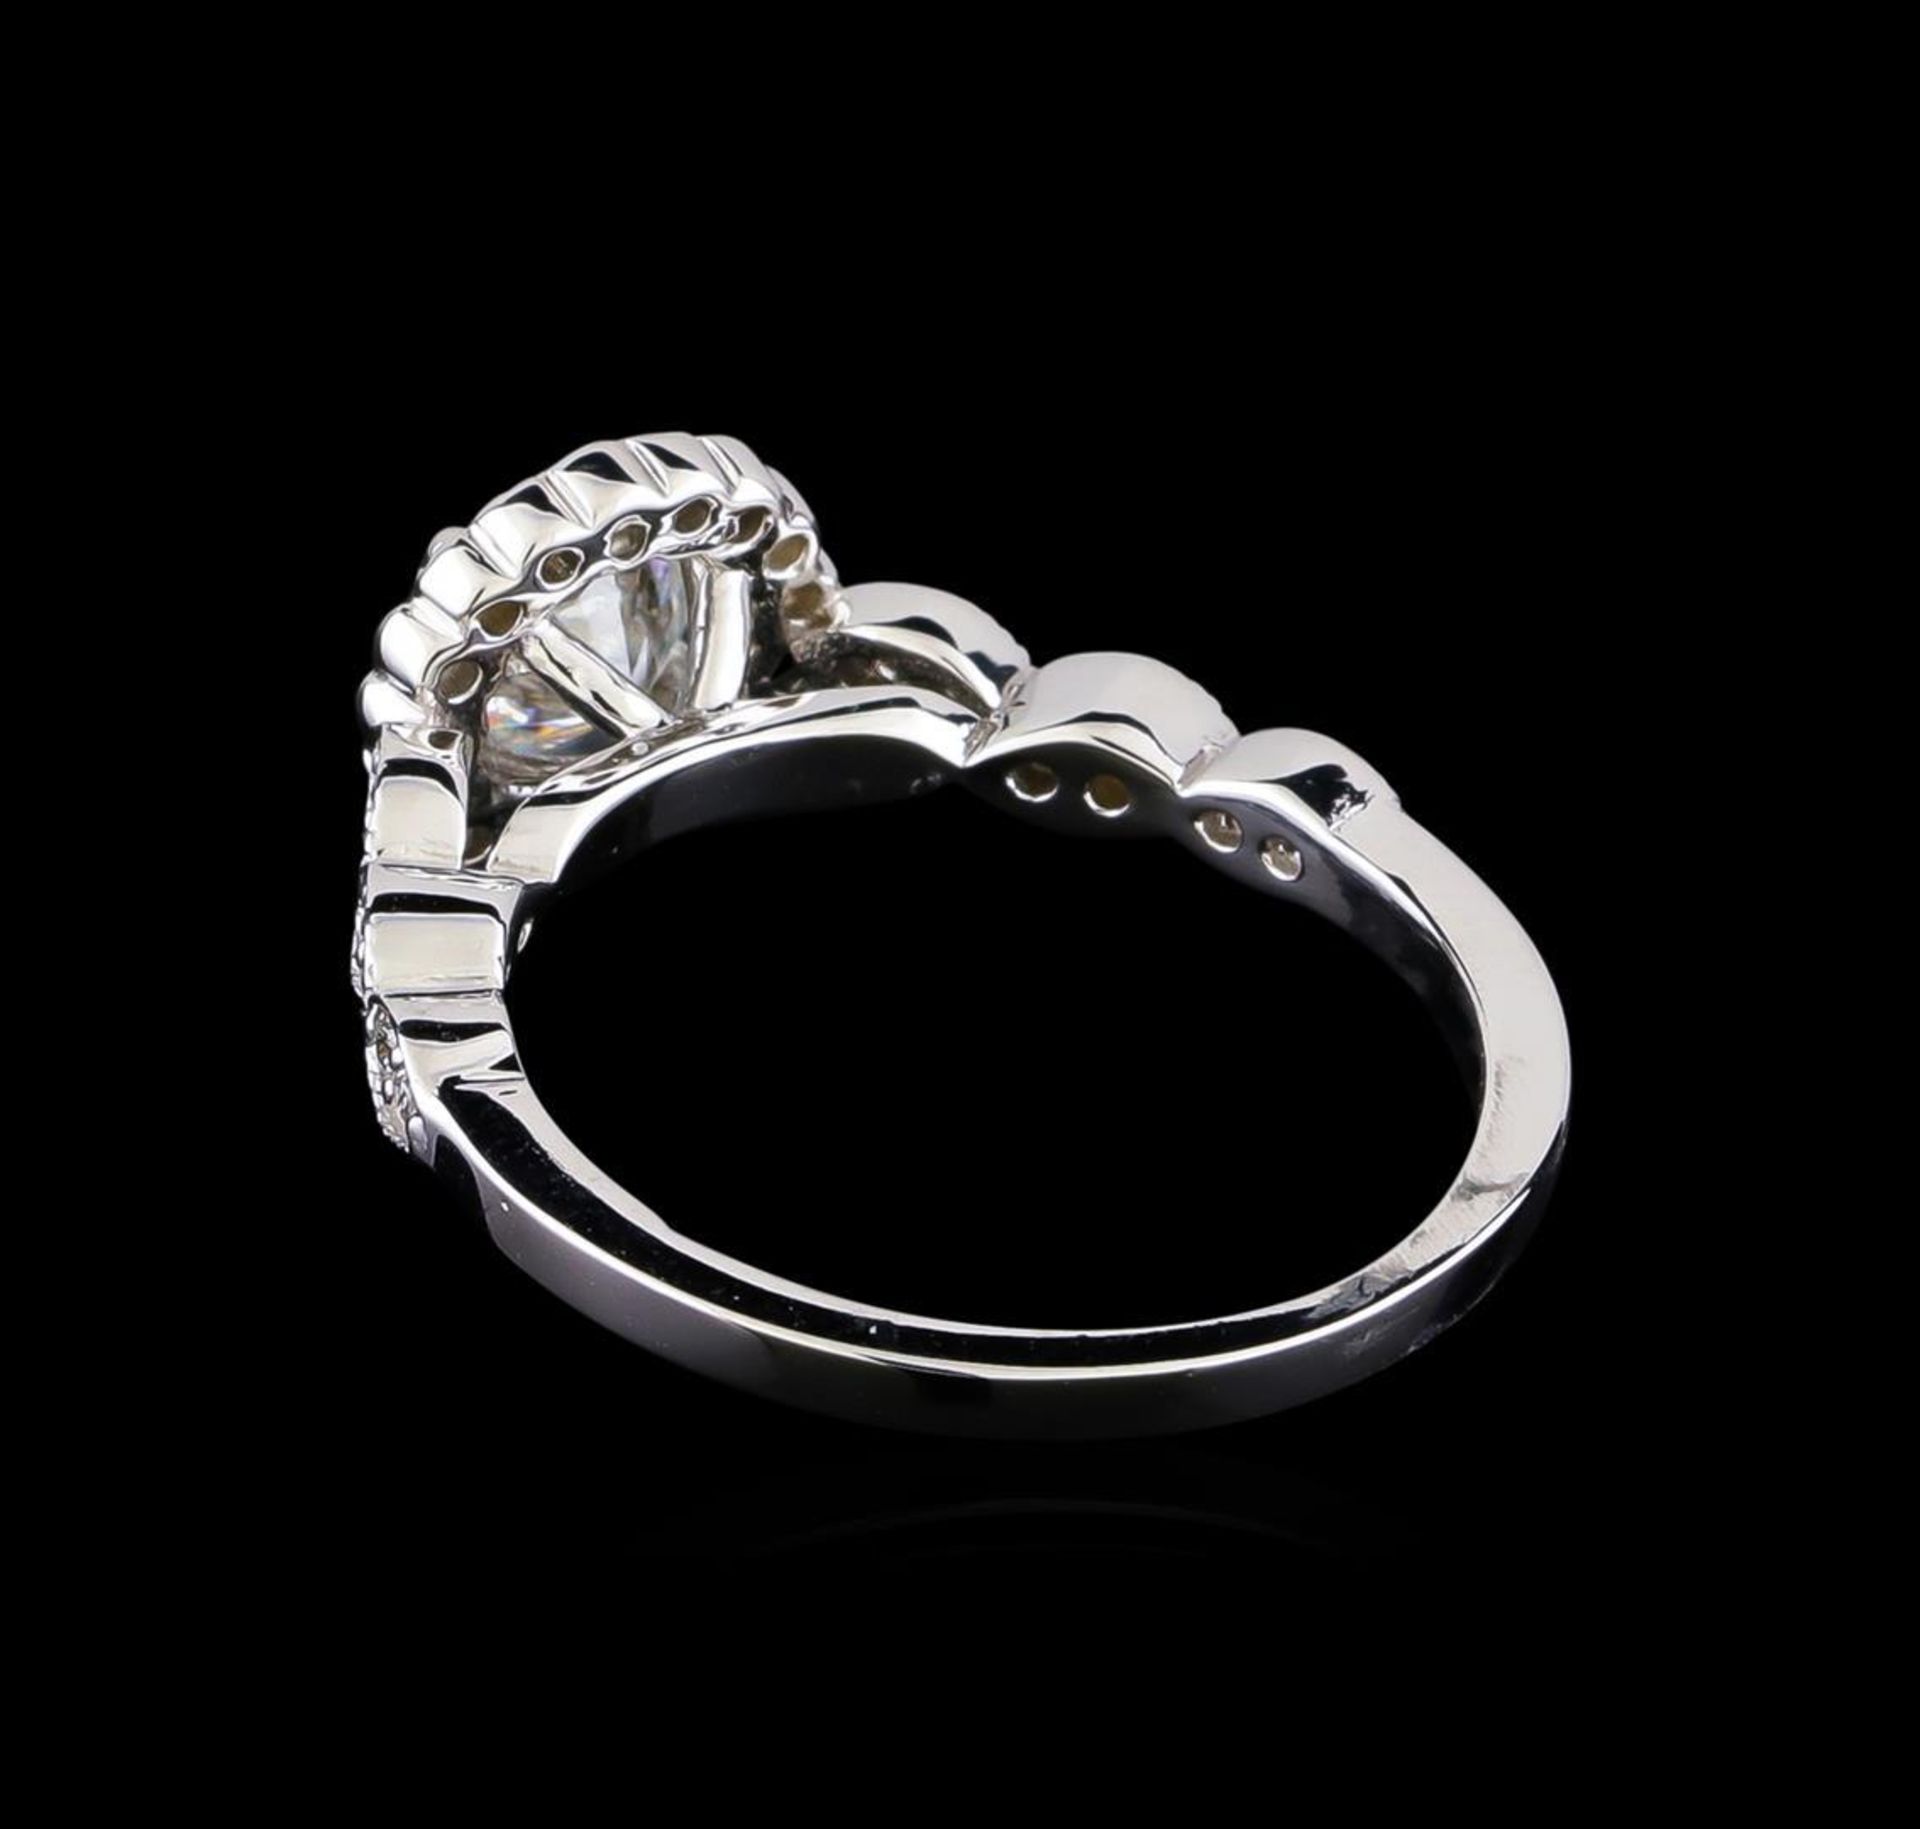 0.92 ctw Diamond Ring - 14KT White Gold - Image 3 of 5